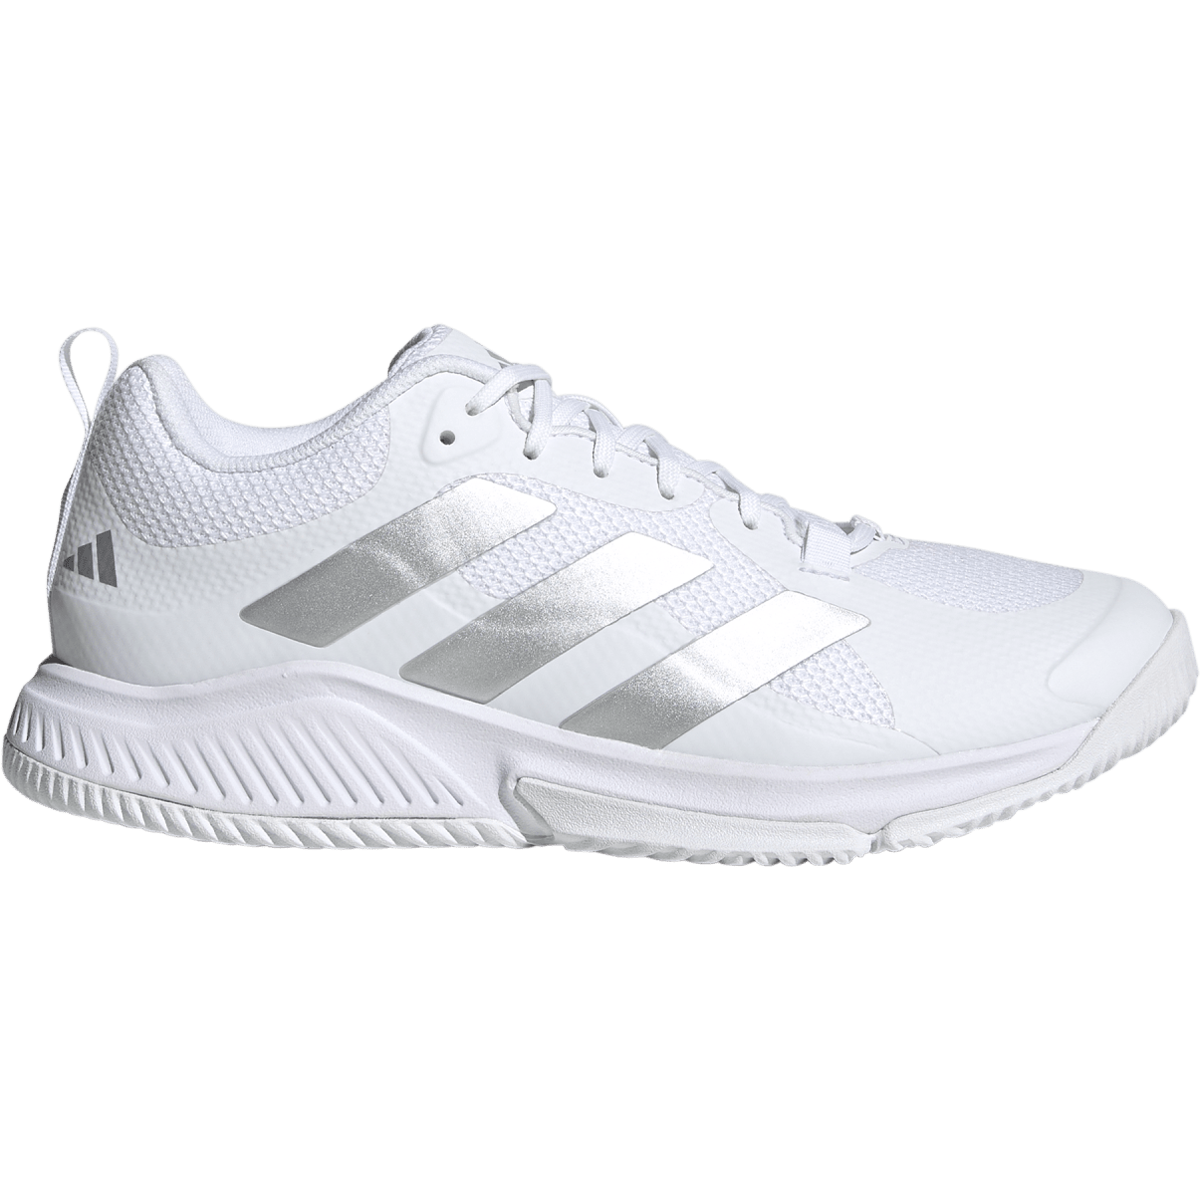 Buy Adidas Women Synthetic RayRun W Running Shoe GRESIX/MLEAD/SILDAW (UK-4)  at Amazon.in